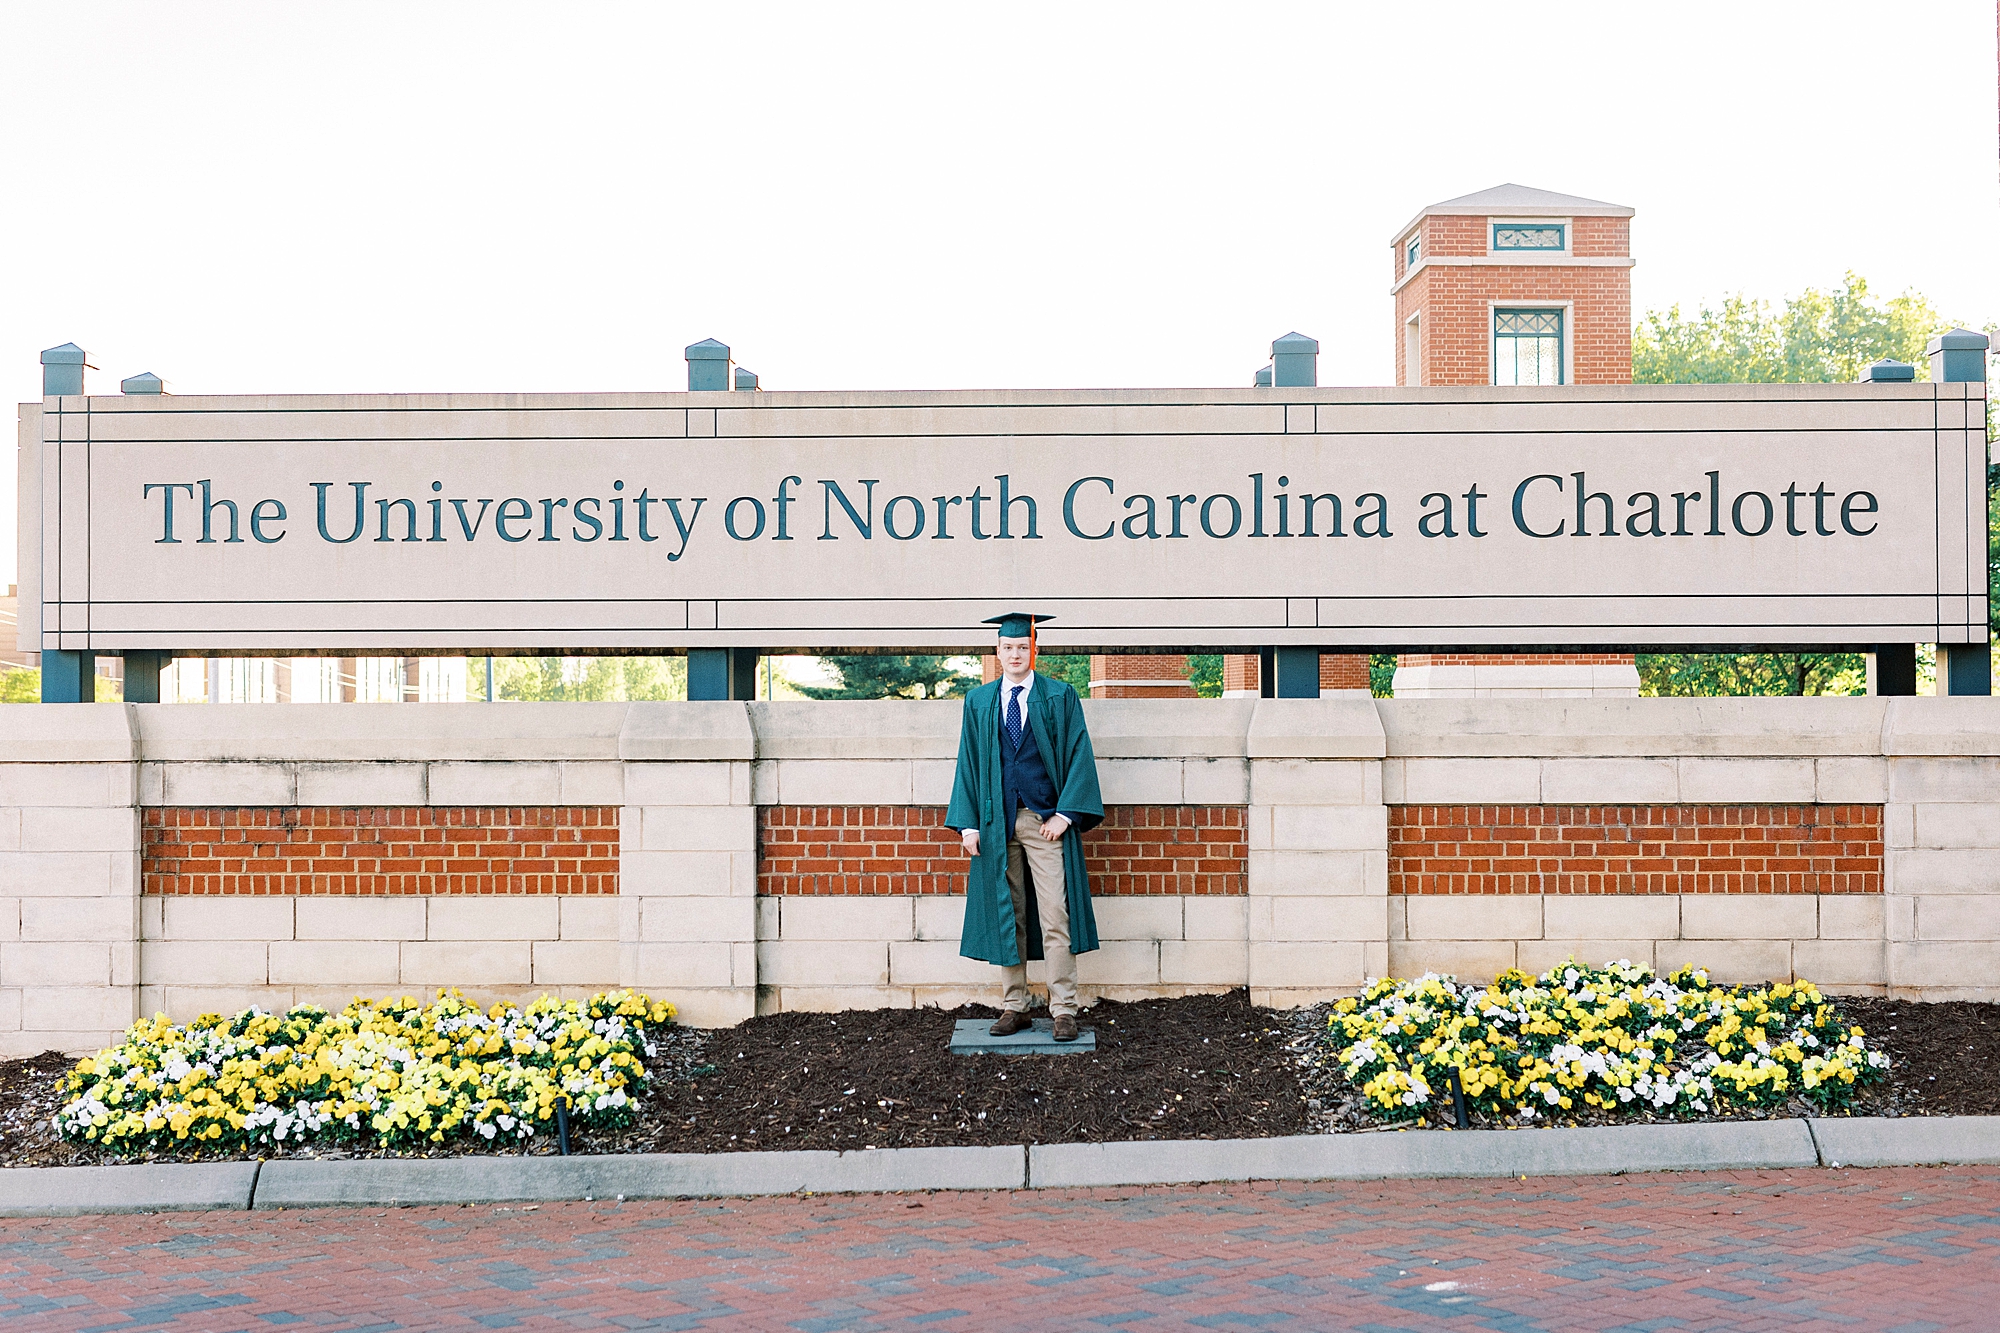 graduating senior leans against University of North Carolina at Charlotte sign